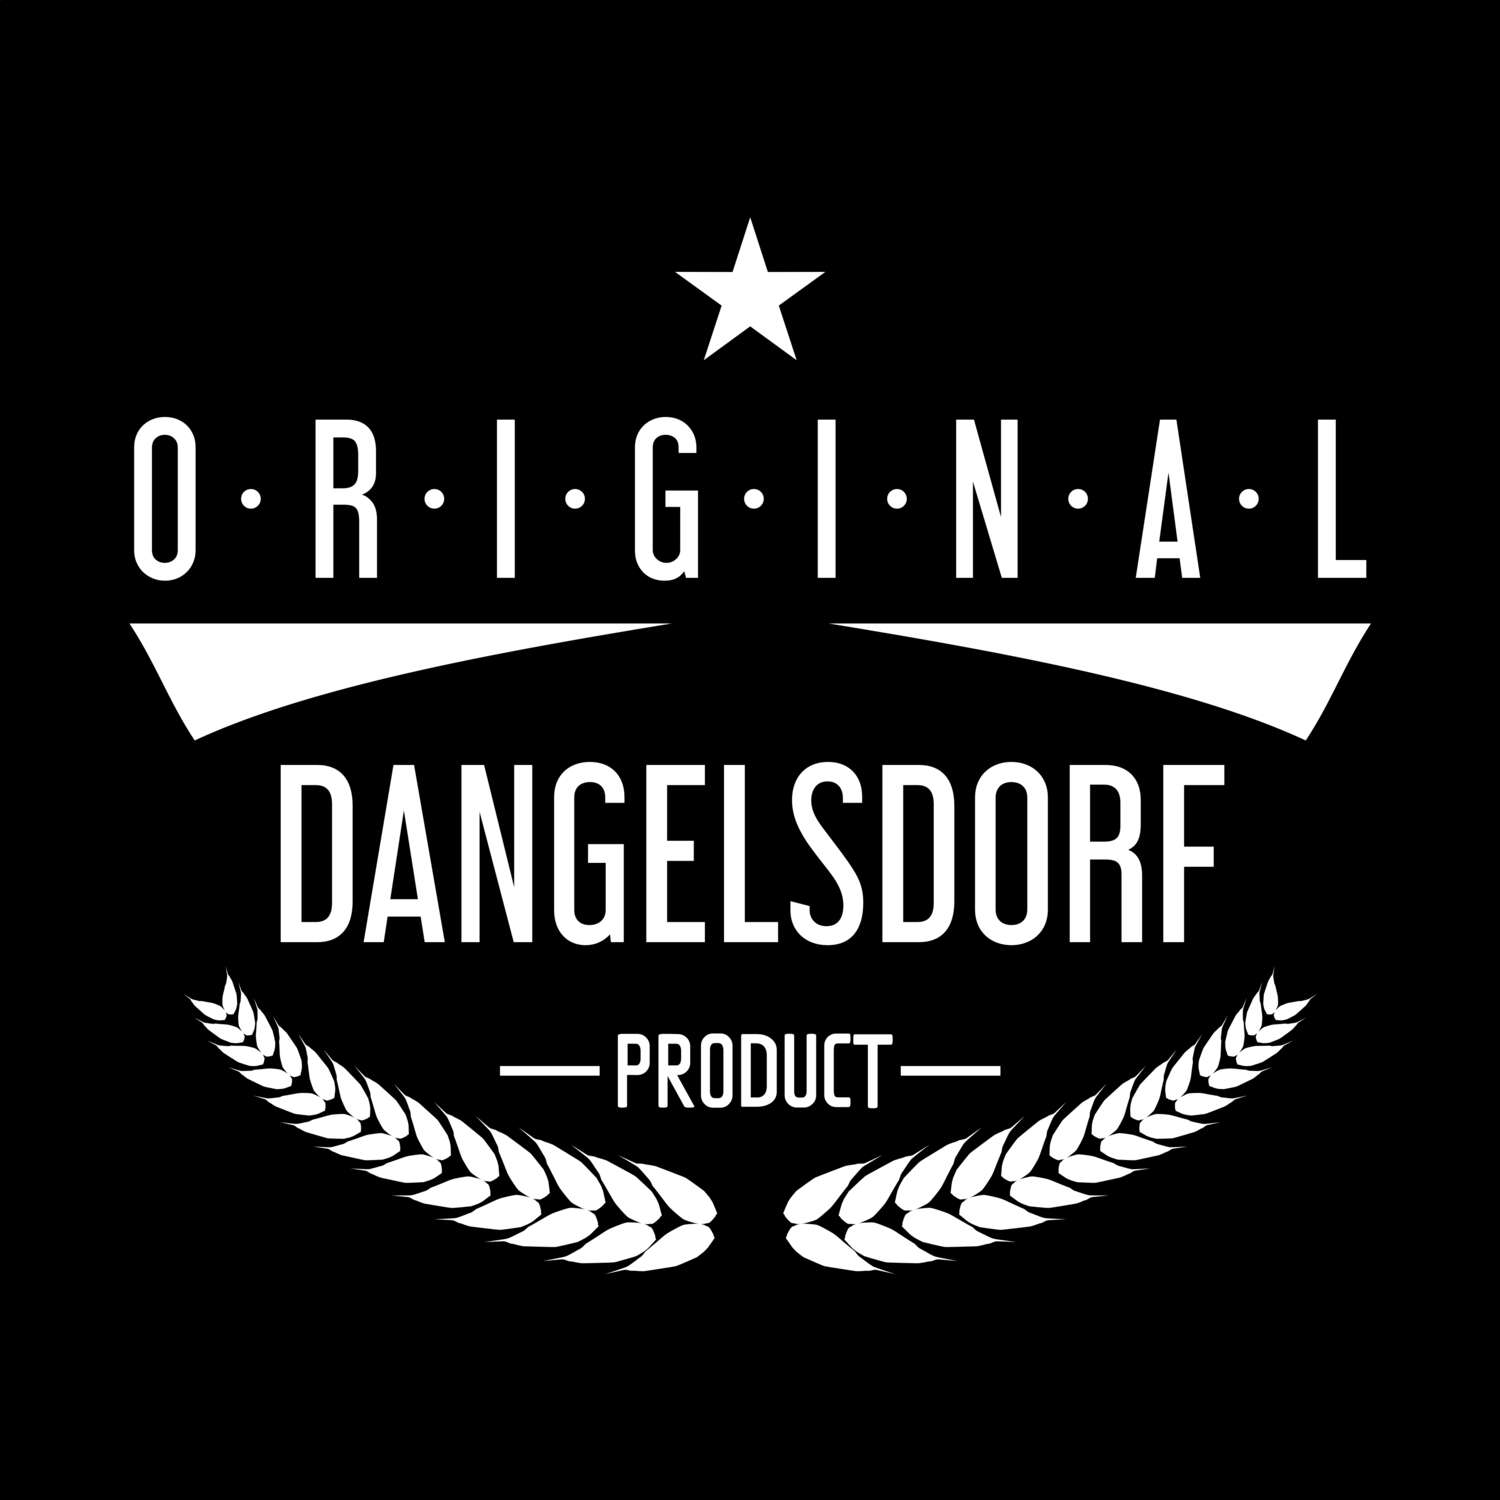 Dangelsdorf T-Shirt »Original Product«